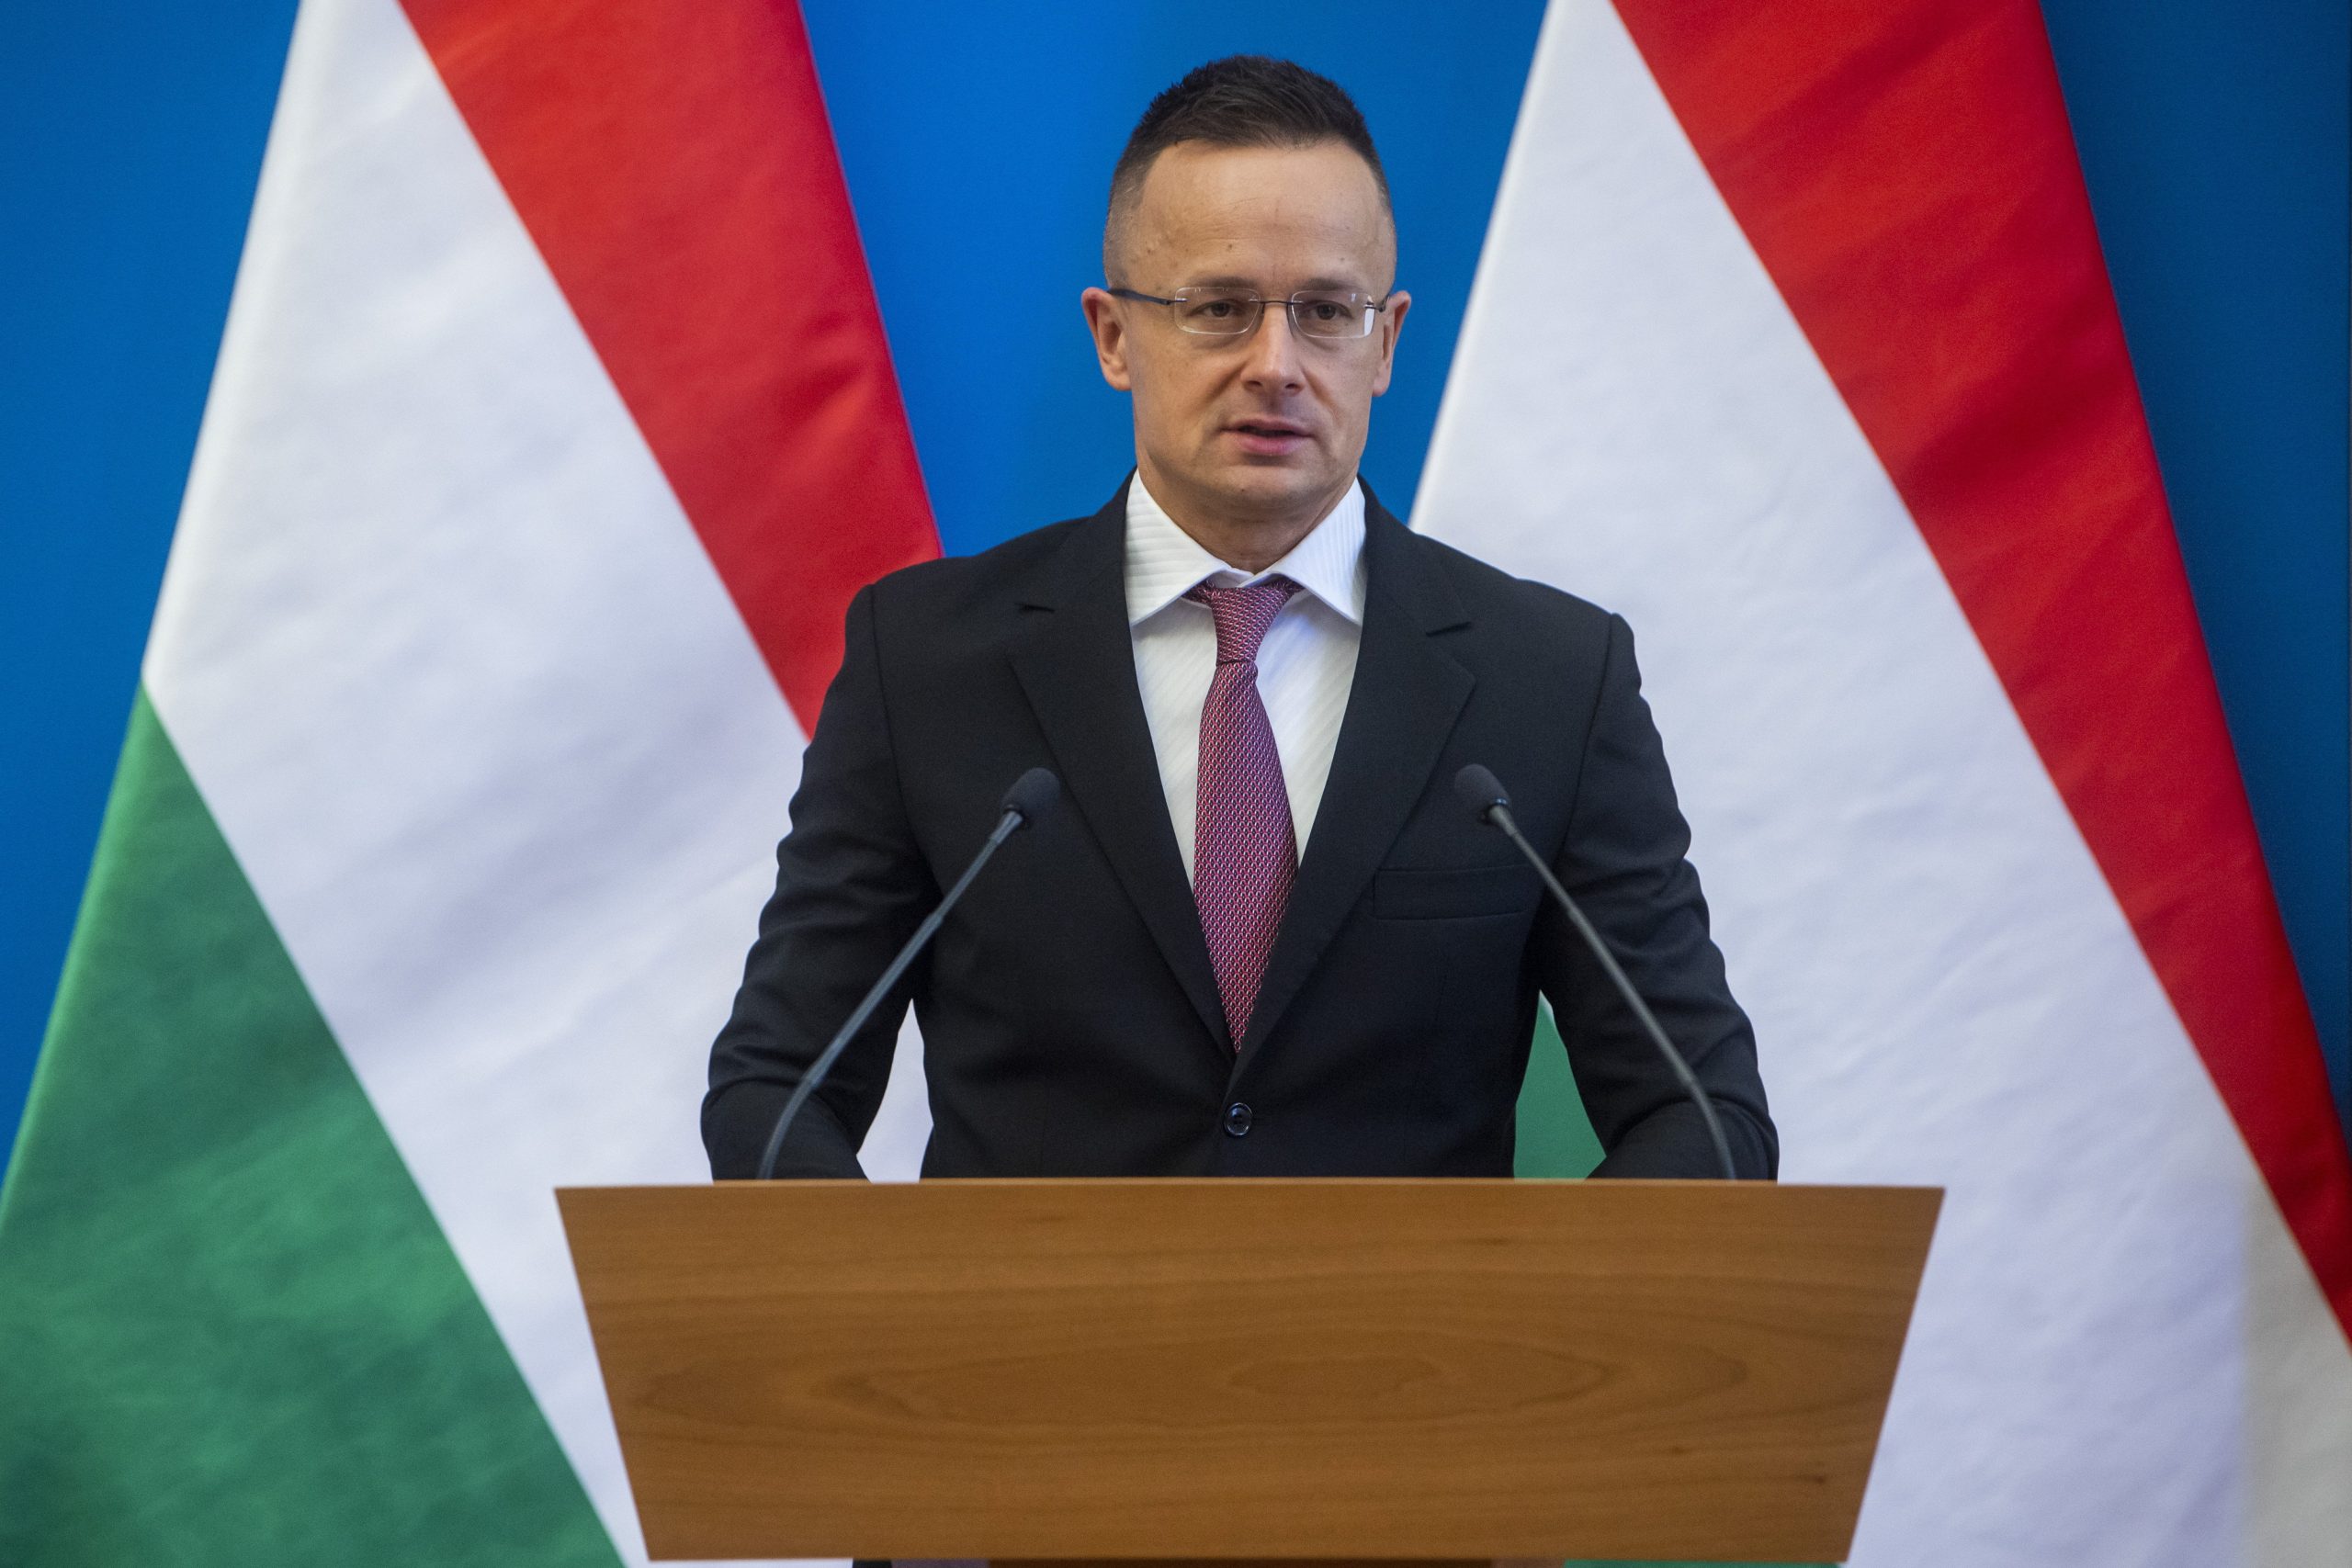 FM Szijjártó Calls on Ukraine's Gov't to 